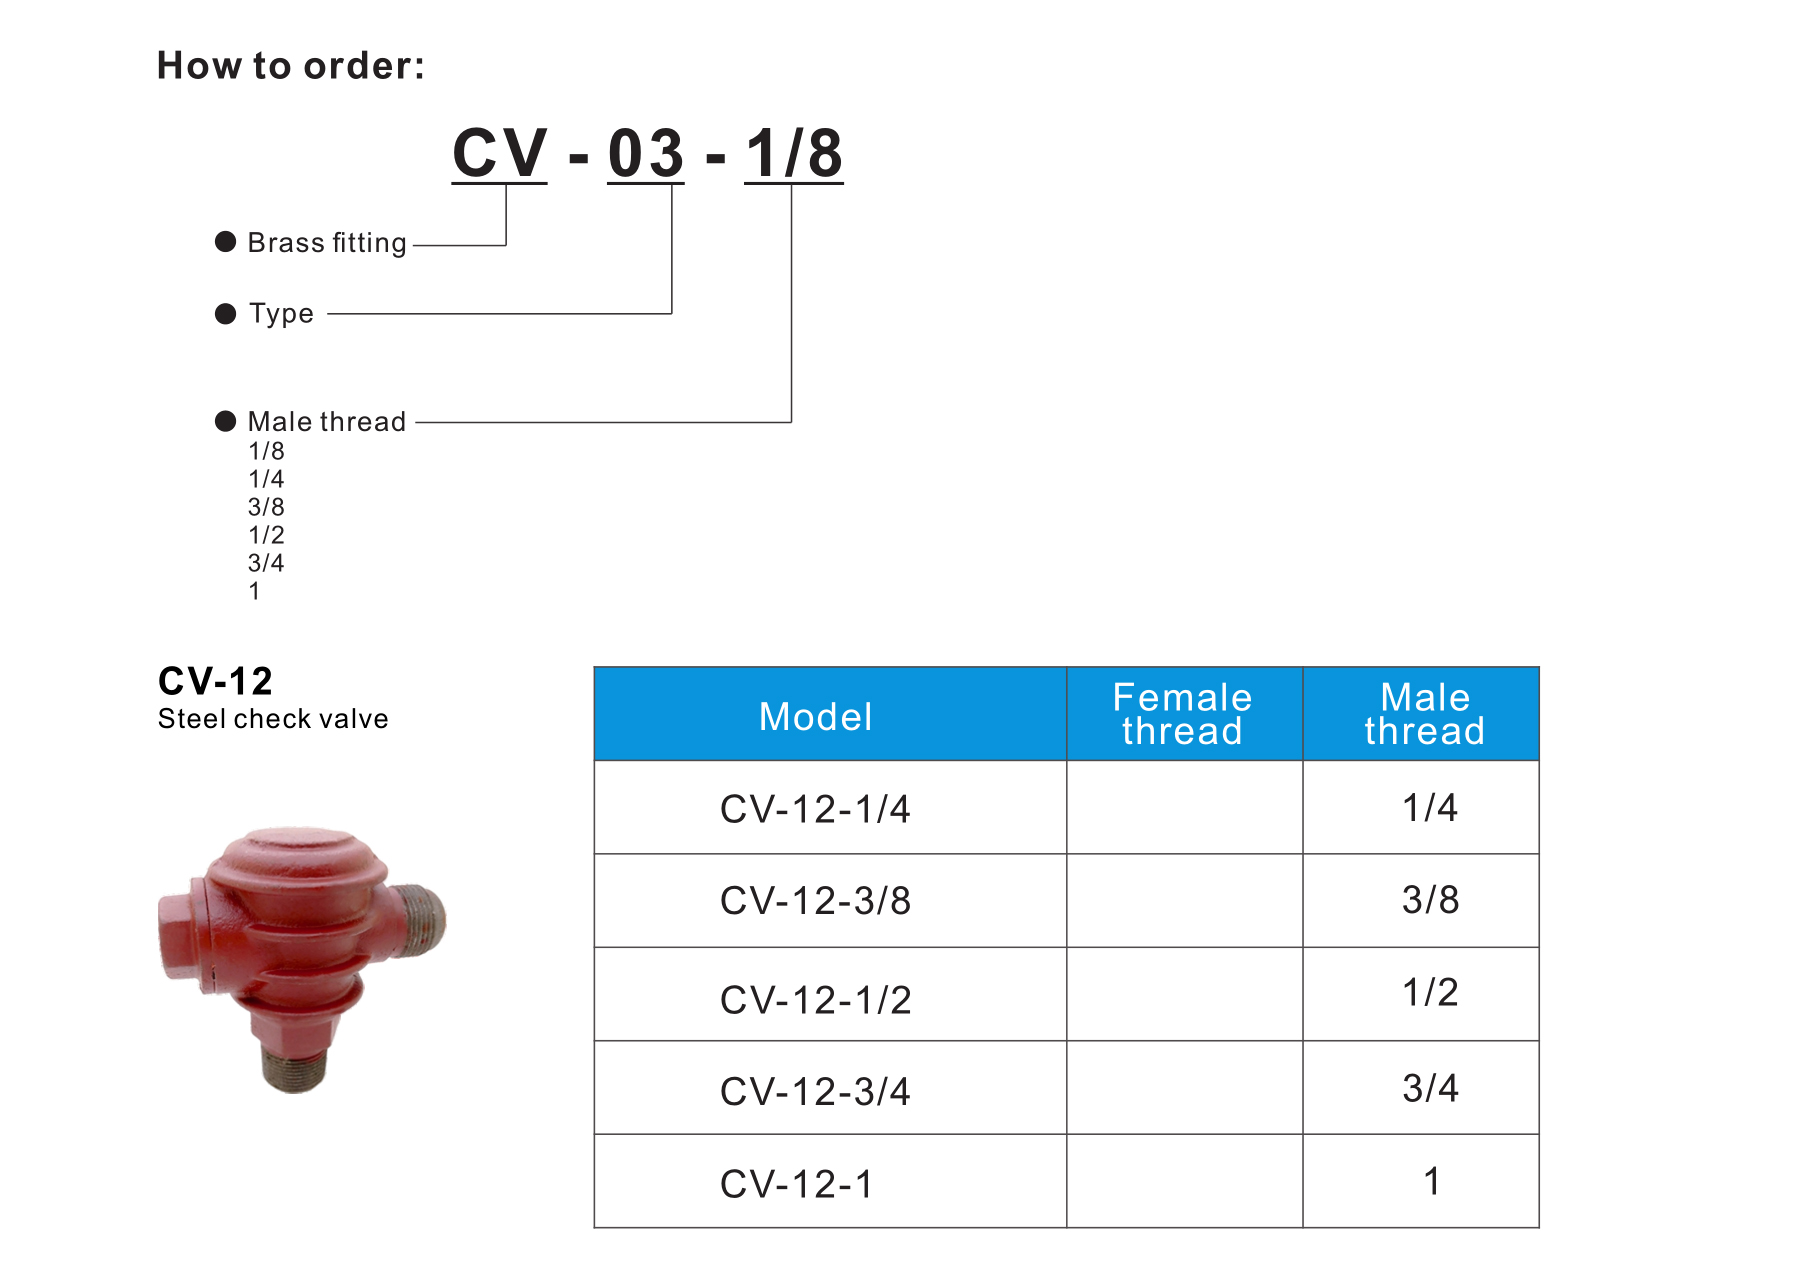 CV-12 Steel check valve